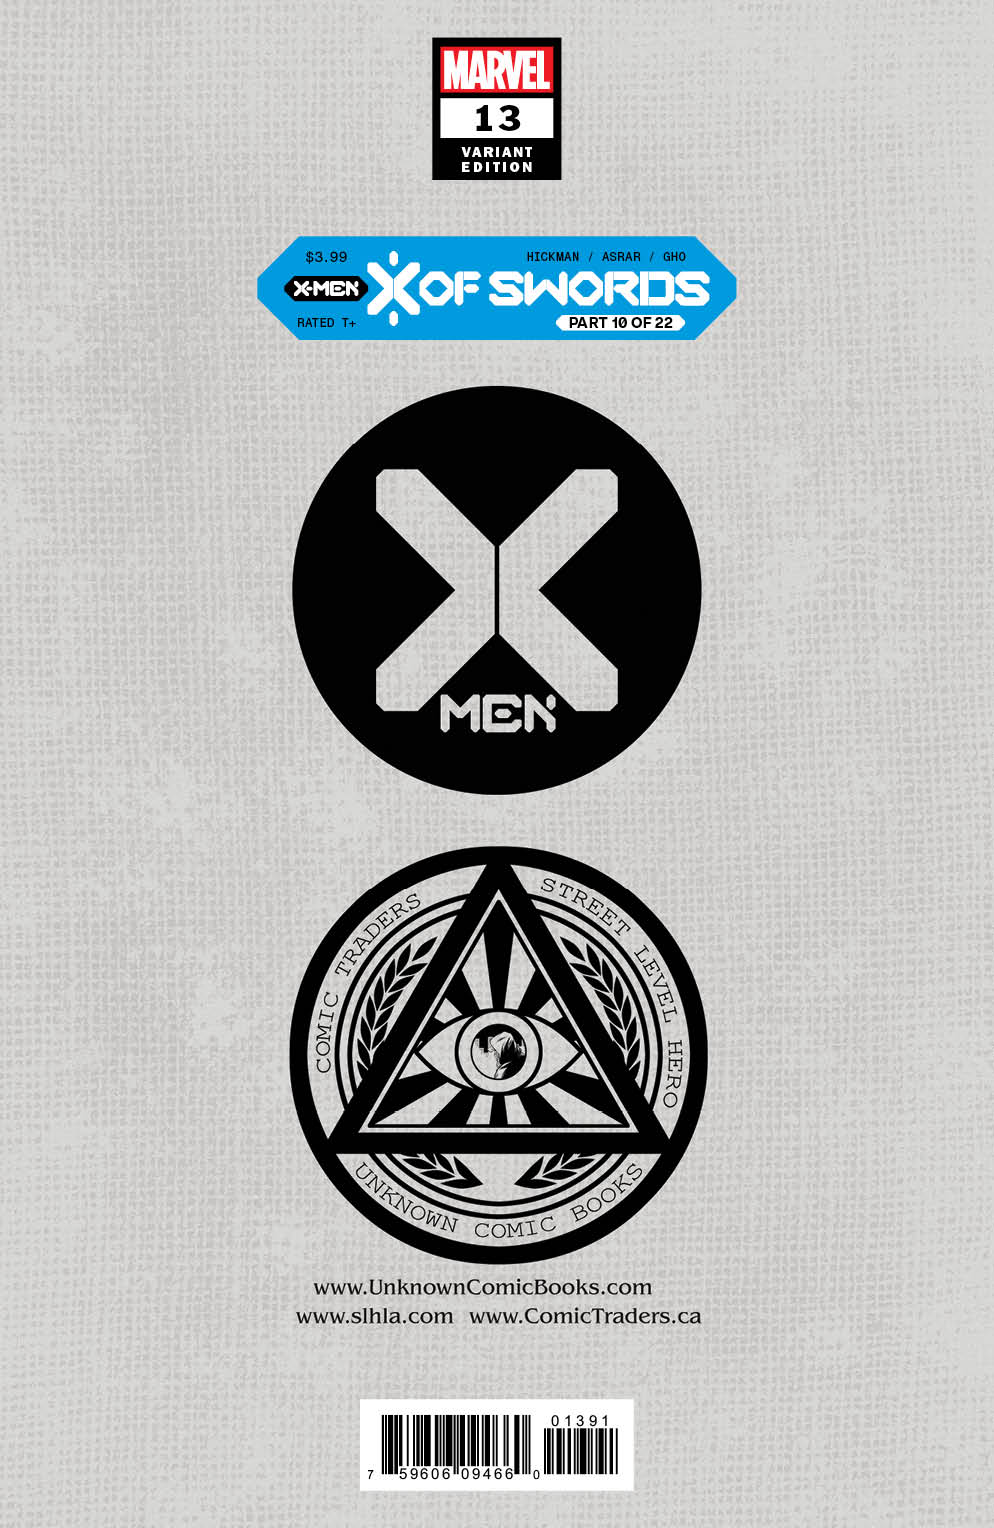 X-MEN #13 | #14 UNKNOWN COMICS KAEL NGU EXCLUSIVE CONNECTING 6 PACK BUNDLE XOS (11/04/2020)